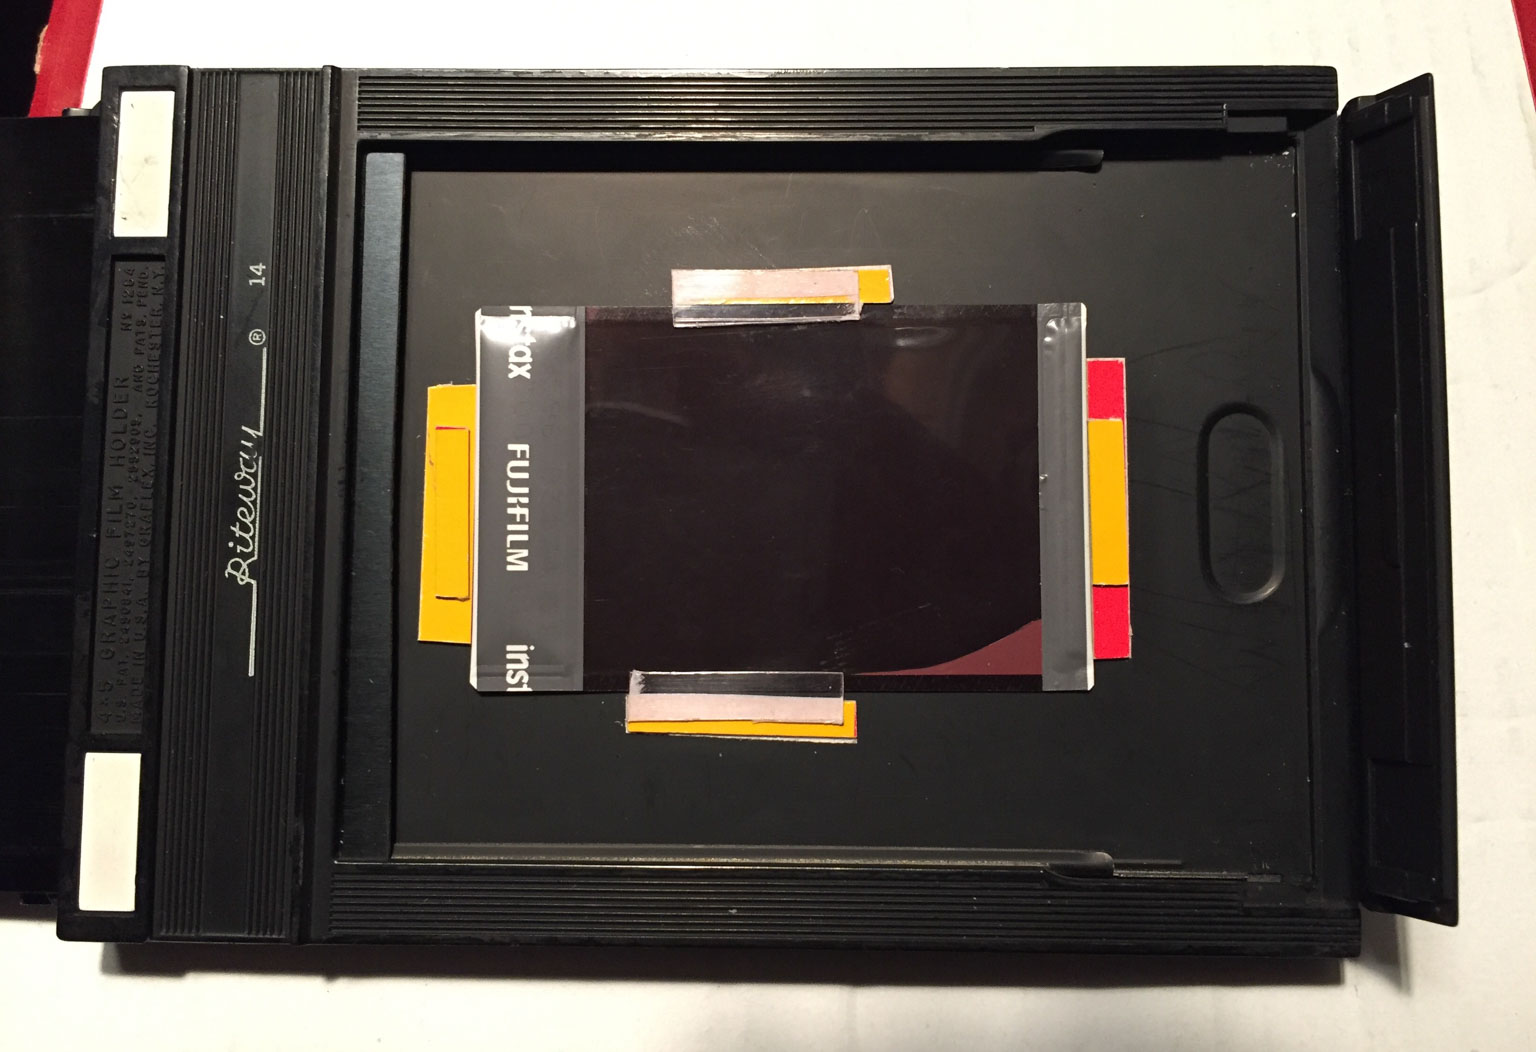 5 x 4 film holder loaded with Instax Mini film